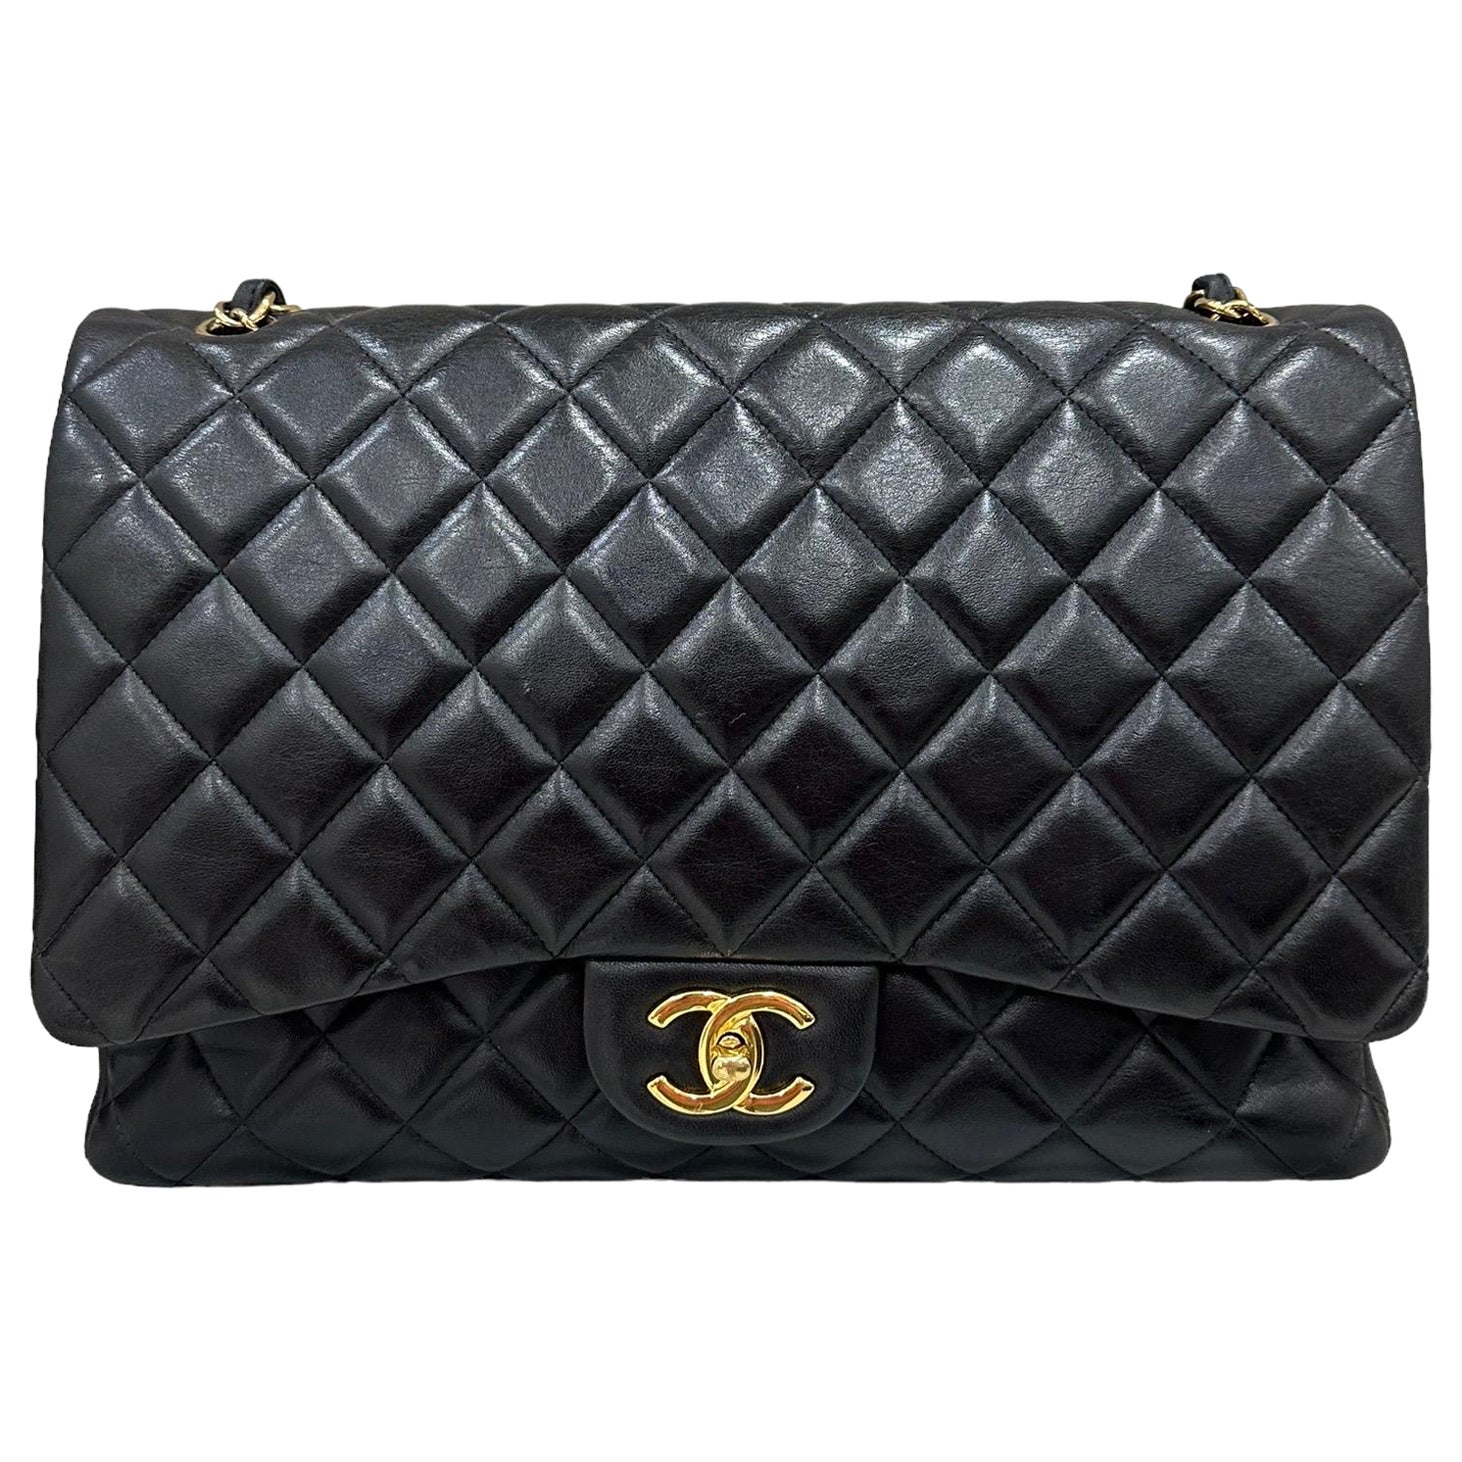 2011 Chanel Timeless Maxi Jumbo Black Leather Top Shoulder Bag For Sale